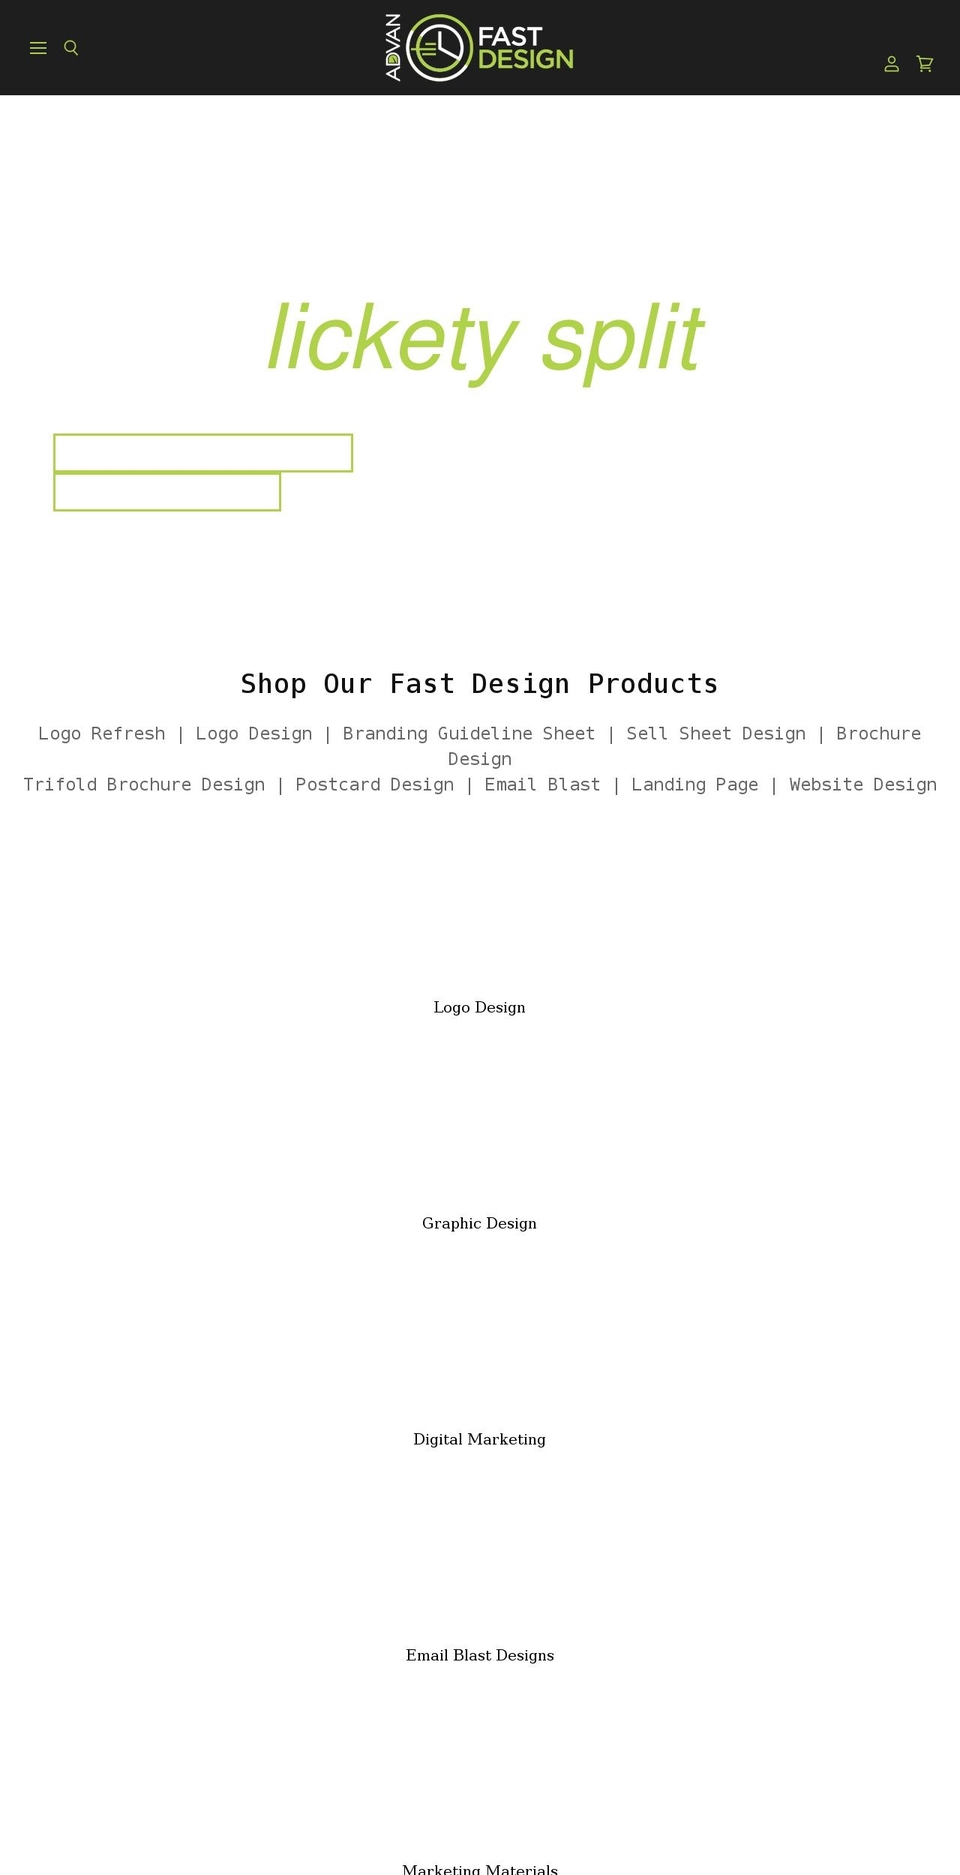 fastdesign.biz shopify website screenshot